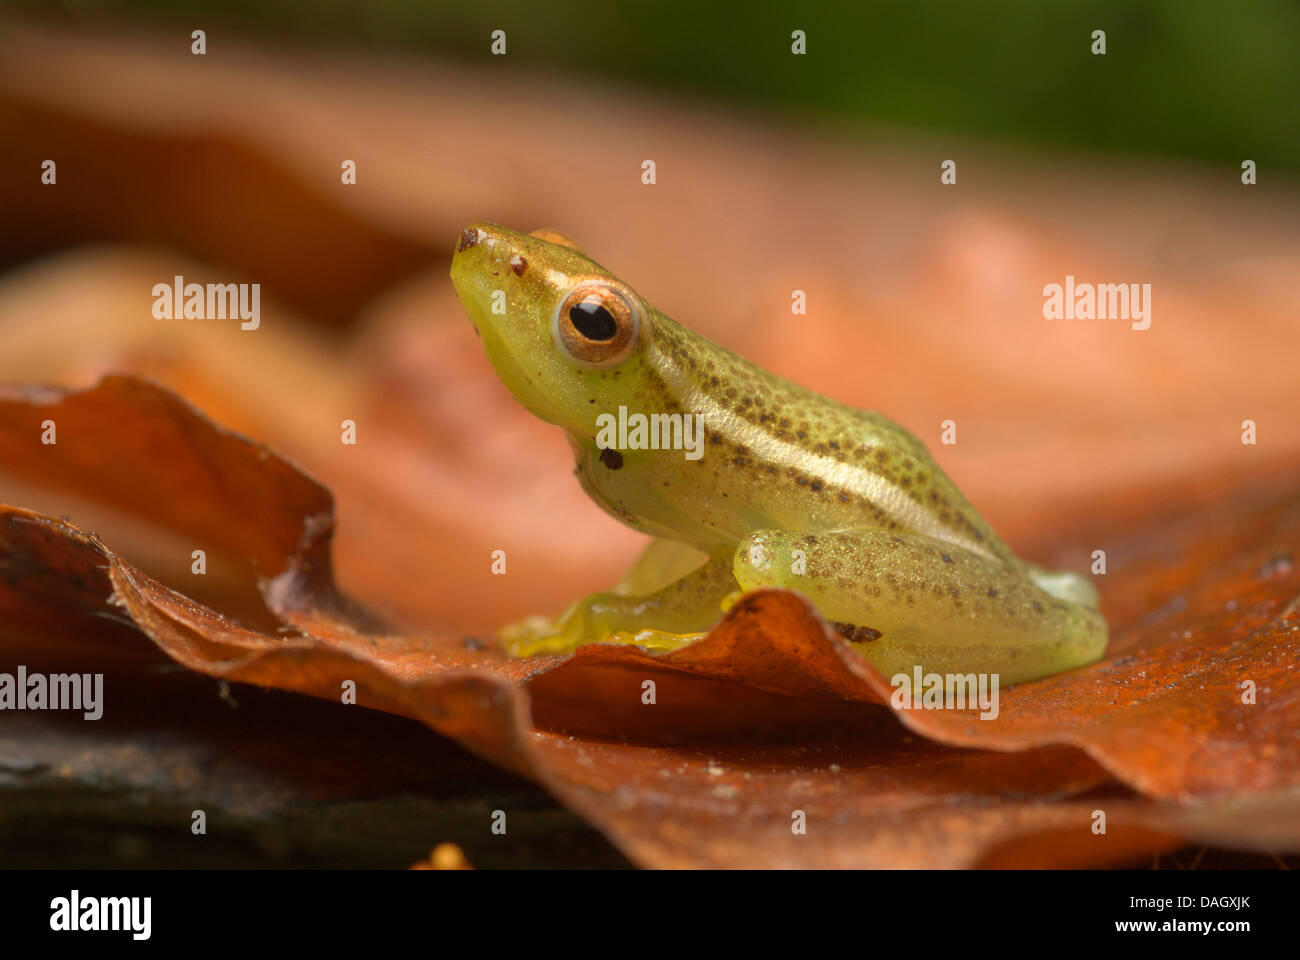 Longnose reed frog, Sharp-nosed African reed frog (Hyperolius nasutus), on brown leaf Stock Photo